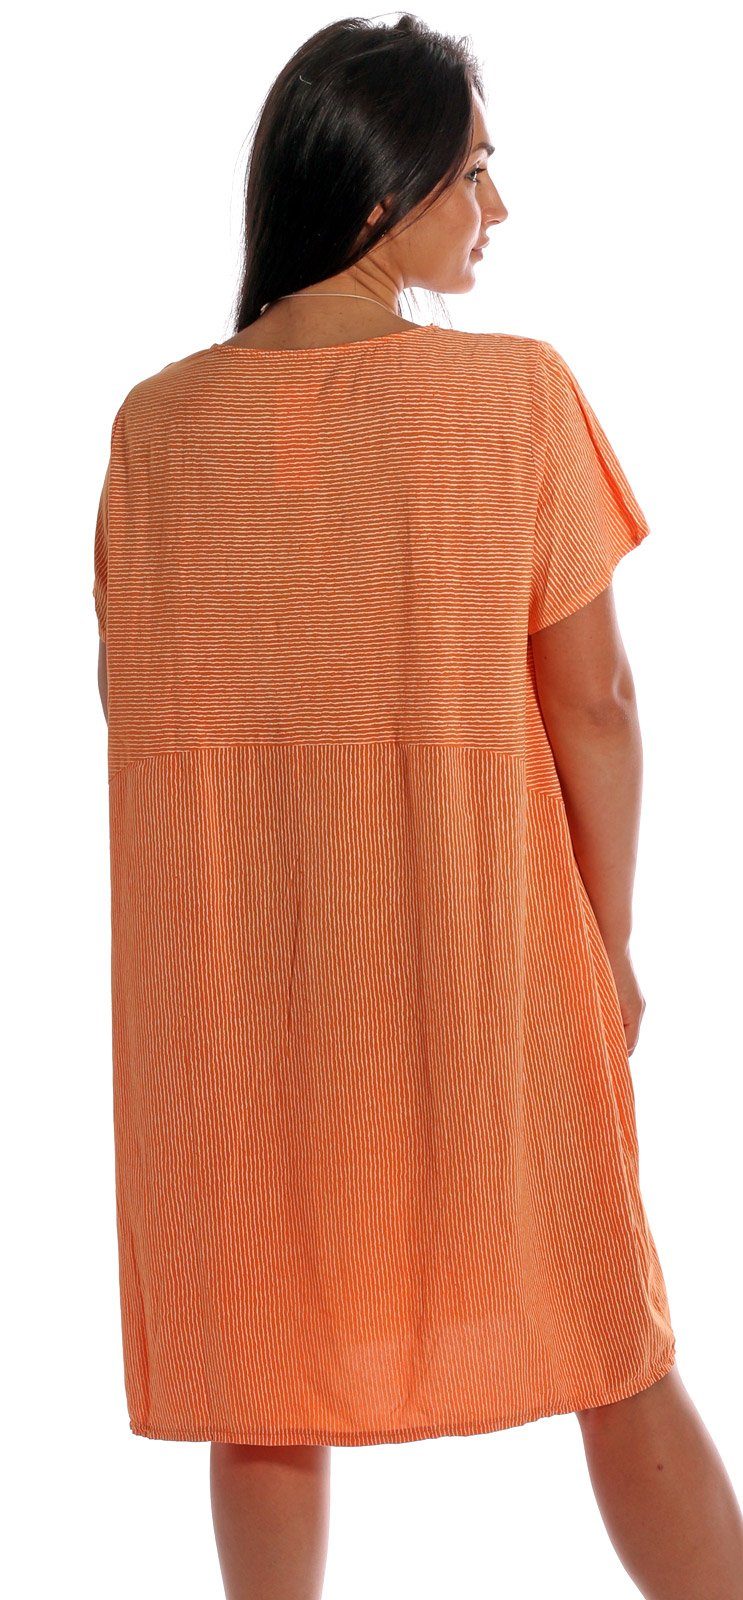 Sommerkleid Orange gestreift Modeschmuckkette Shirtkleid Moda mit Charis "Paula"